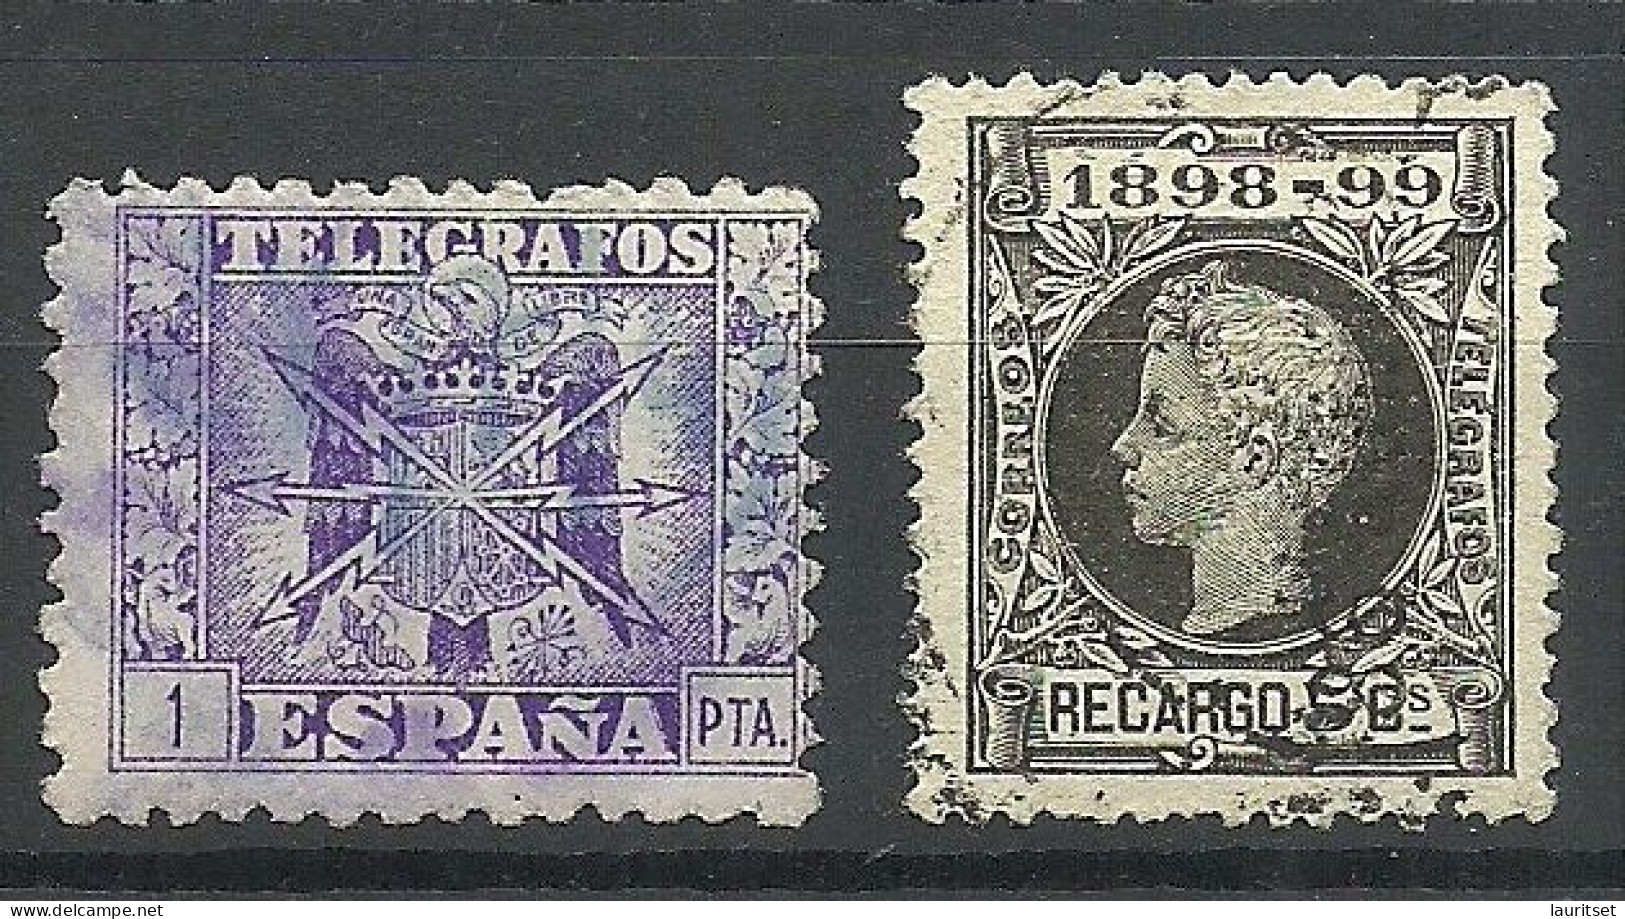 SPAIN Spanien Espana Telegrafos Telegraph Stamps Telegraphe, 2 Stamps, O - Telegrafen